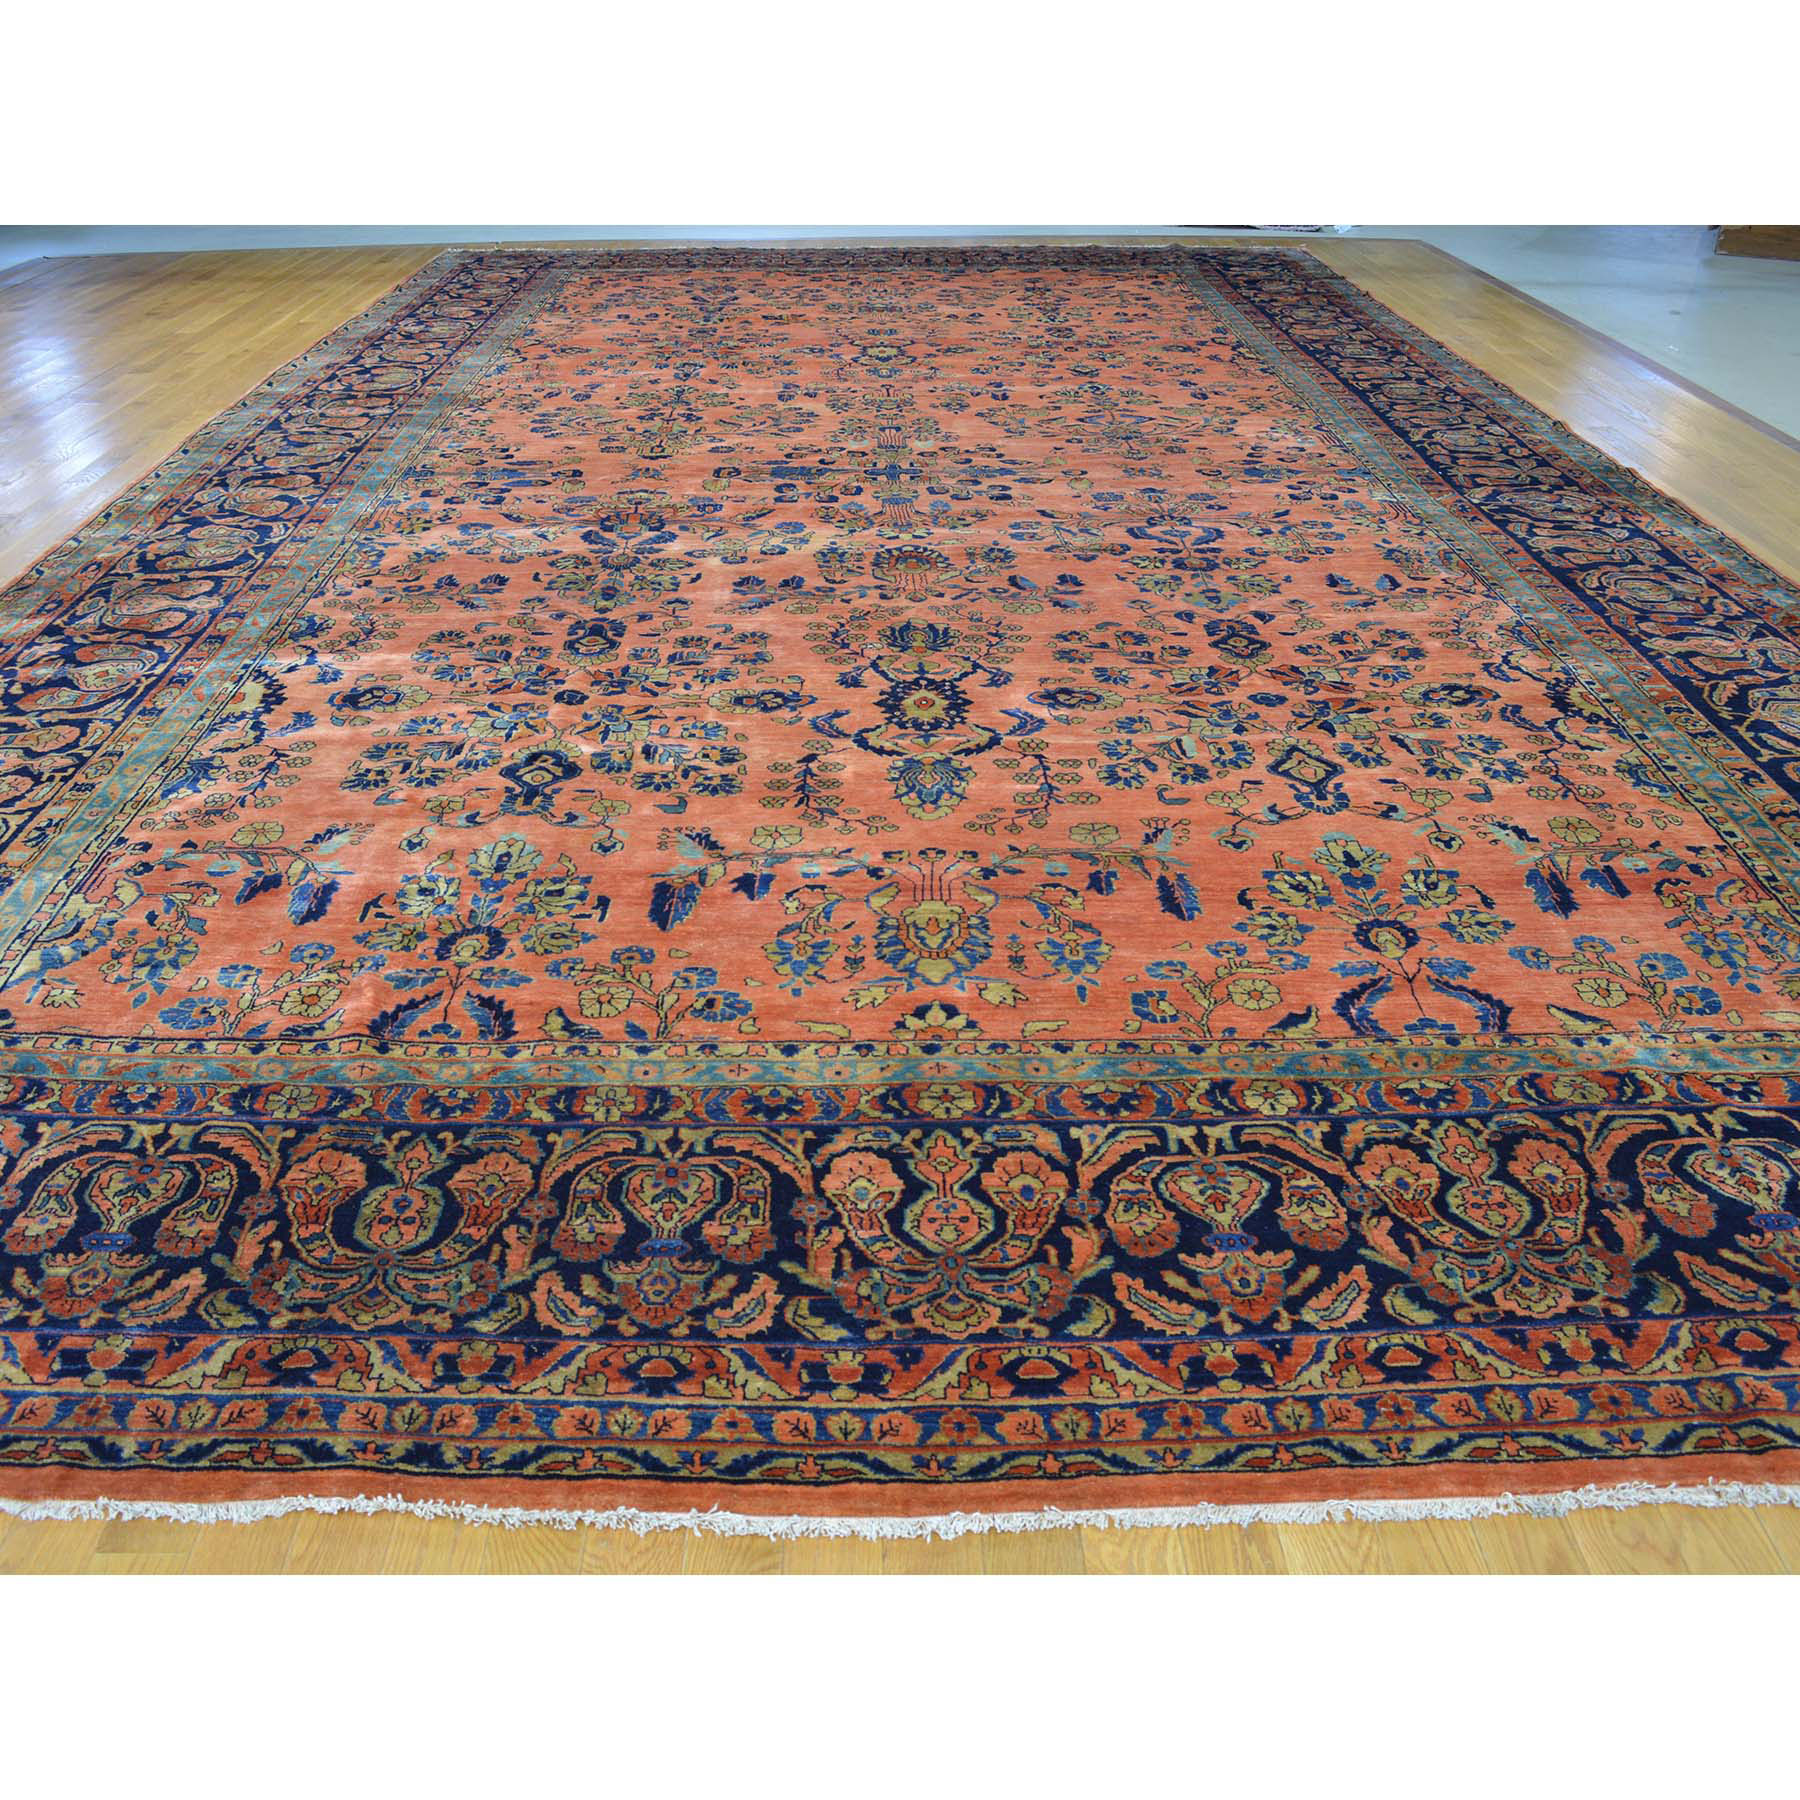 12-3 x21-4  Antique Persian Maharajan Sarouk Full Pile Oversize Rug 